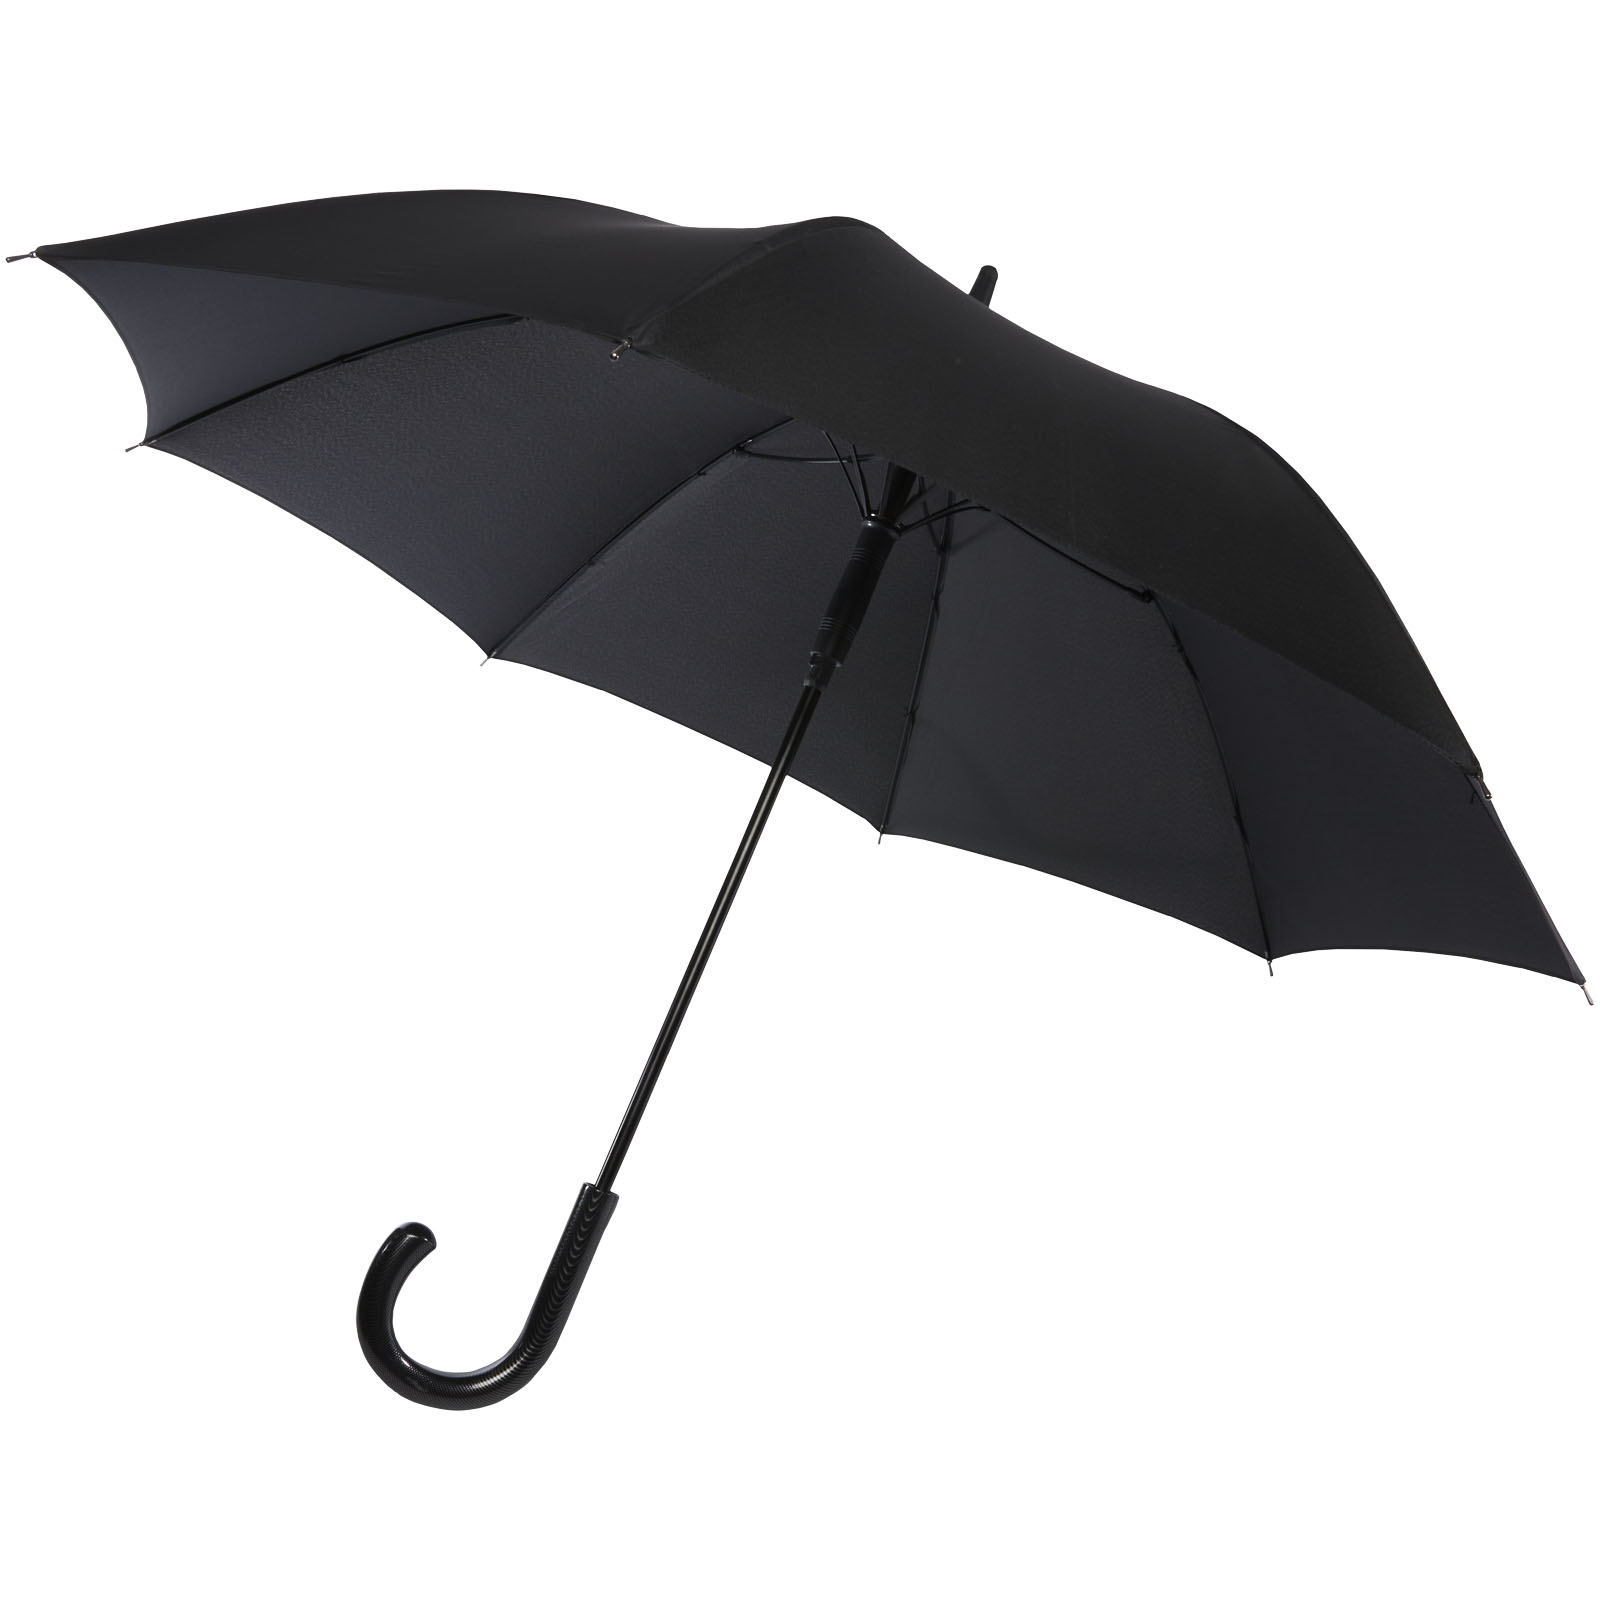 Advertising Standard Umbrellas - Fontana 23